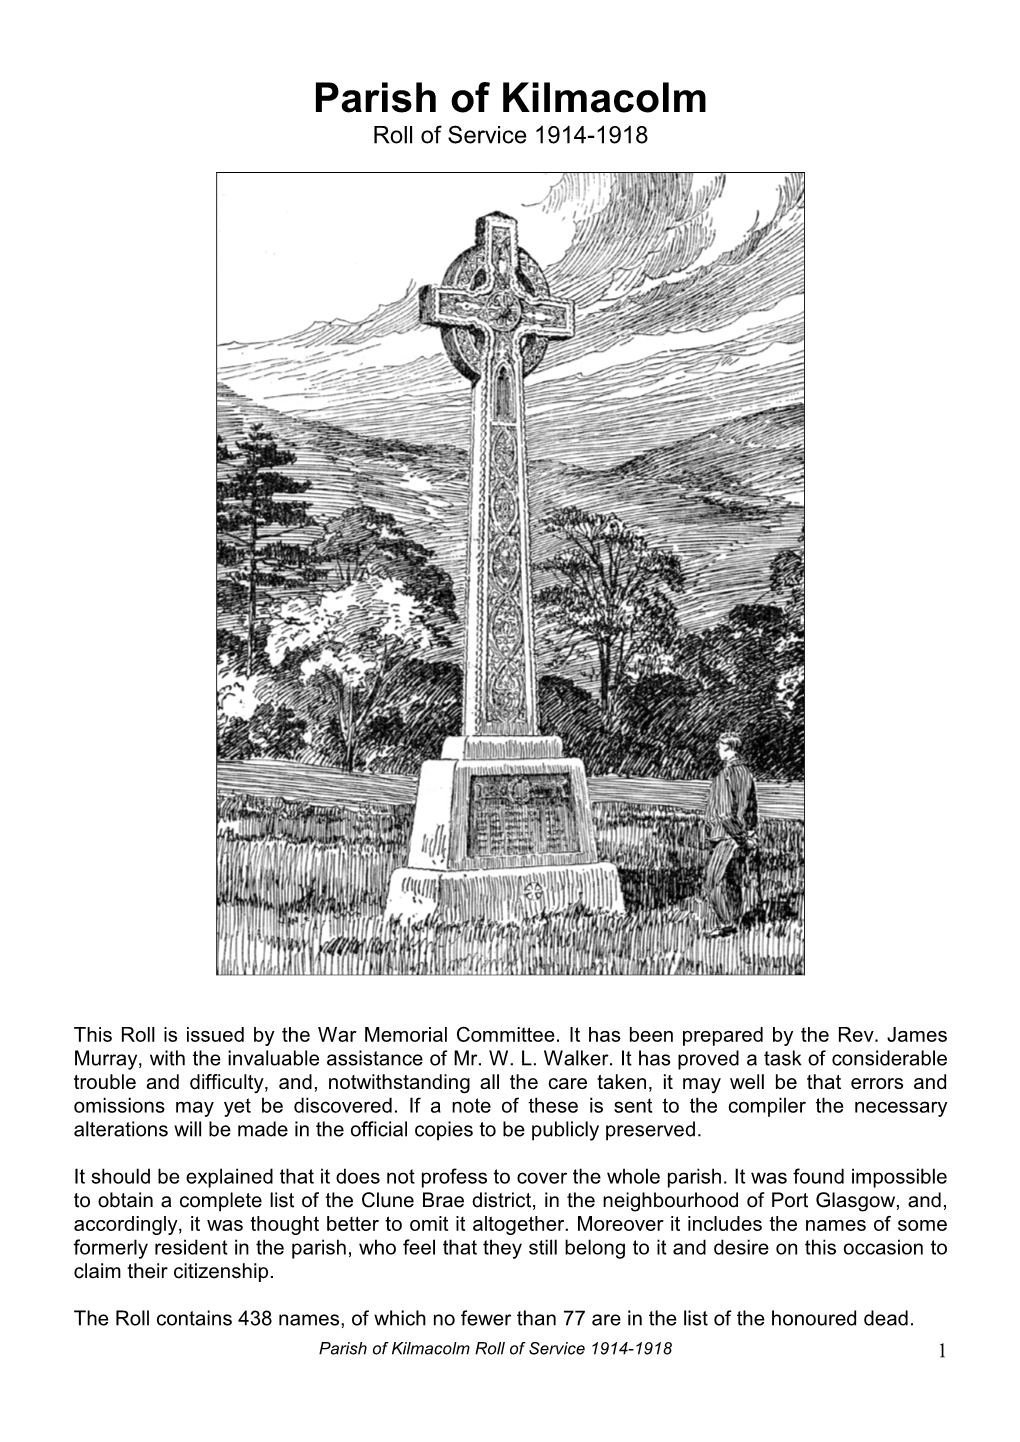 Parish of Kilmacolm Roll of Service 1914-1918